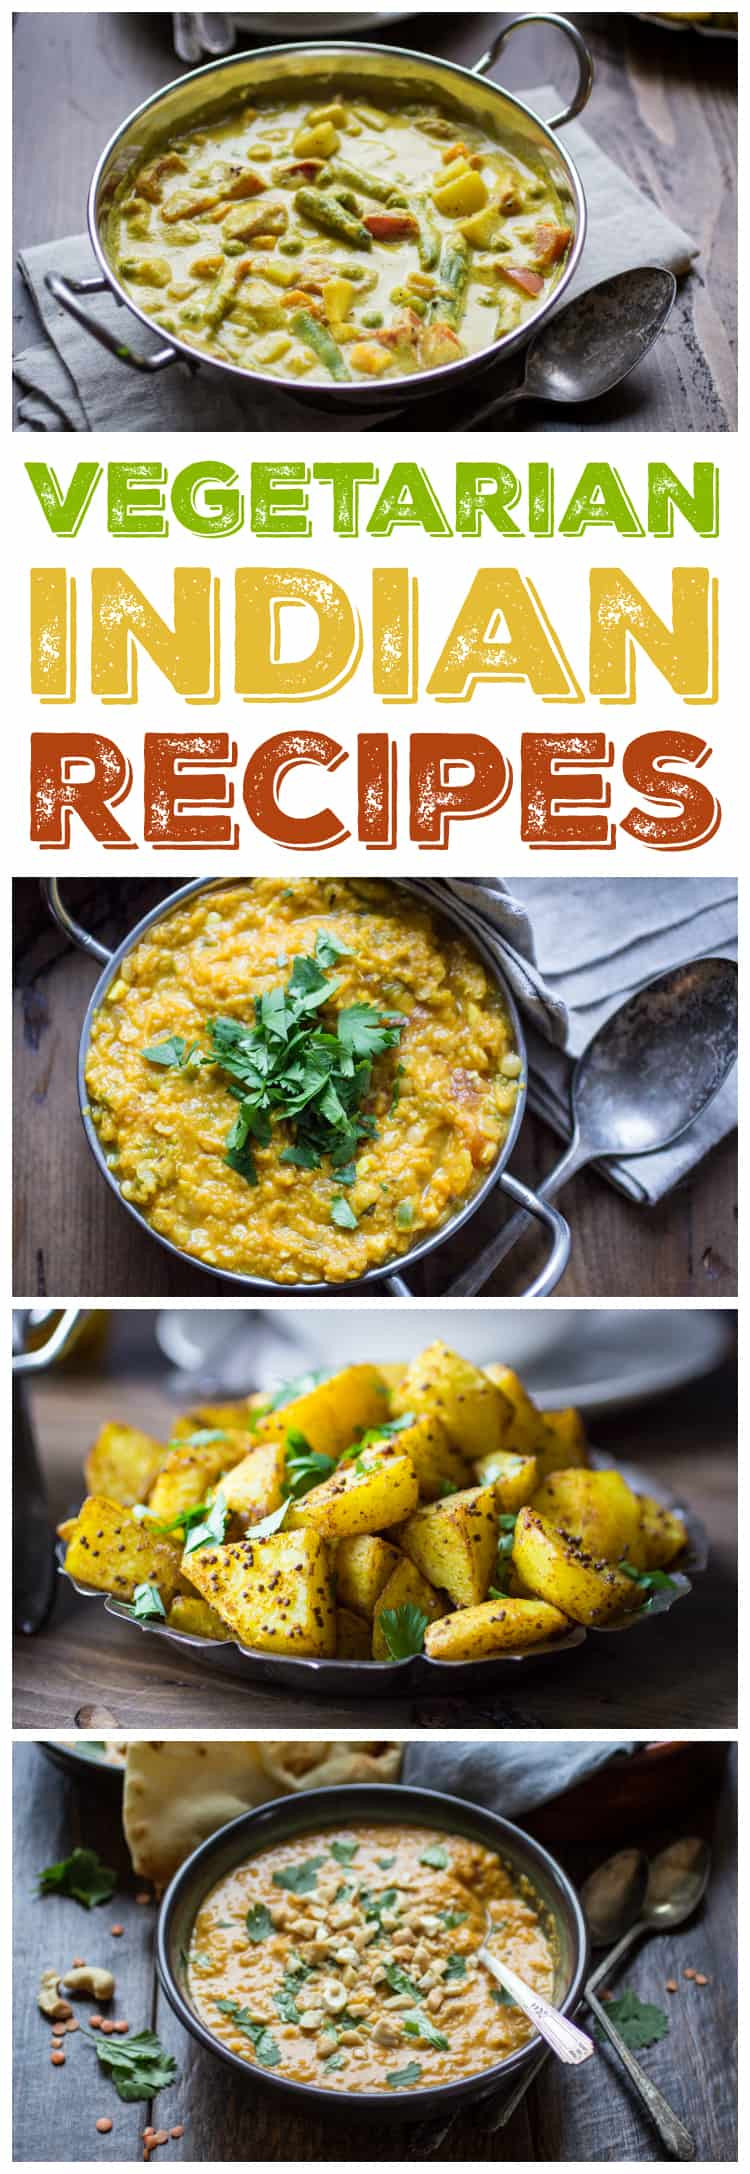 Indian Tofu Recipes Vegetarian
 10 Ve arian Indian Recipes to Make Again and Again The